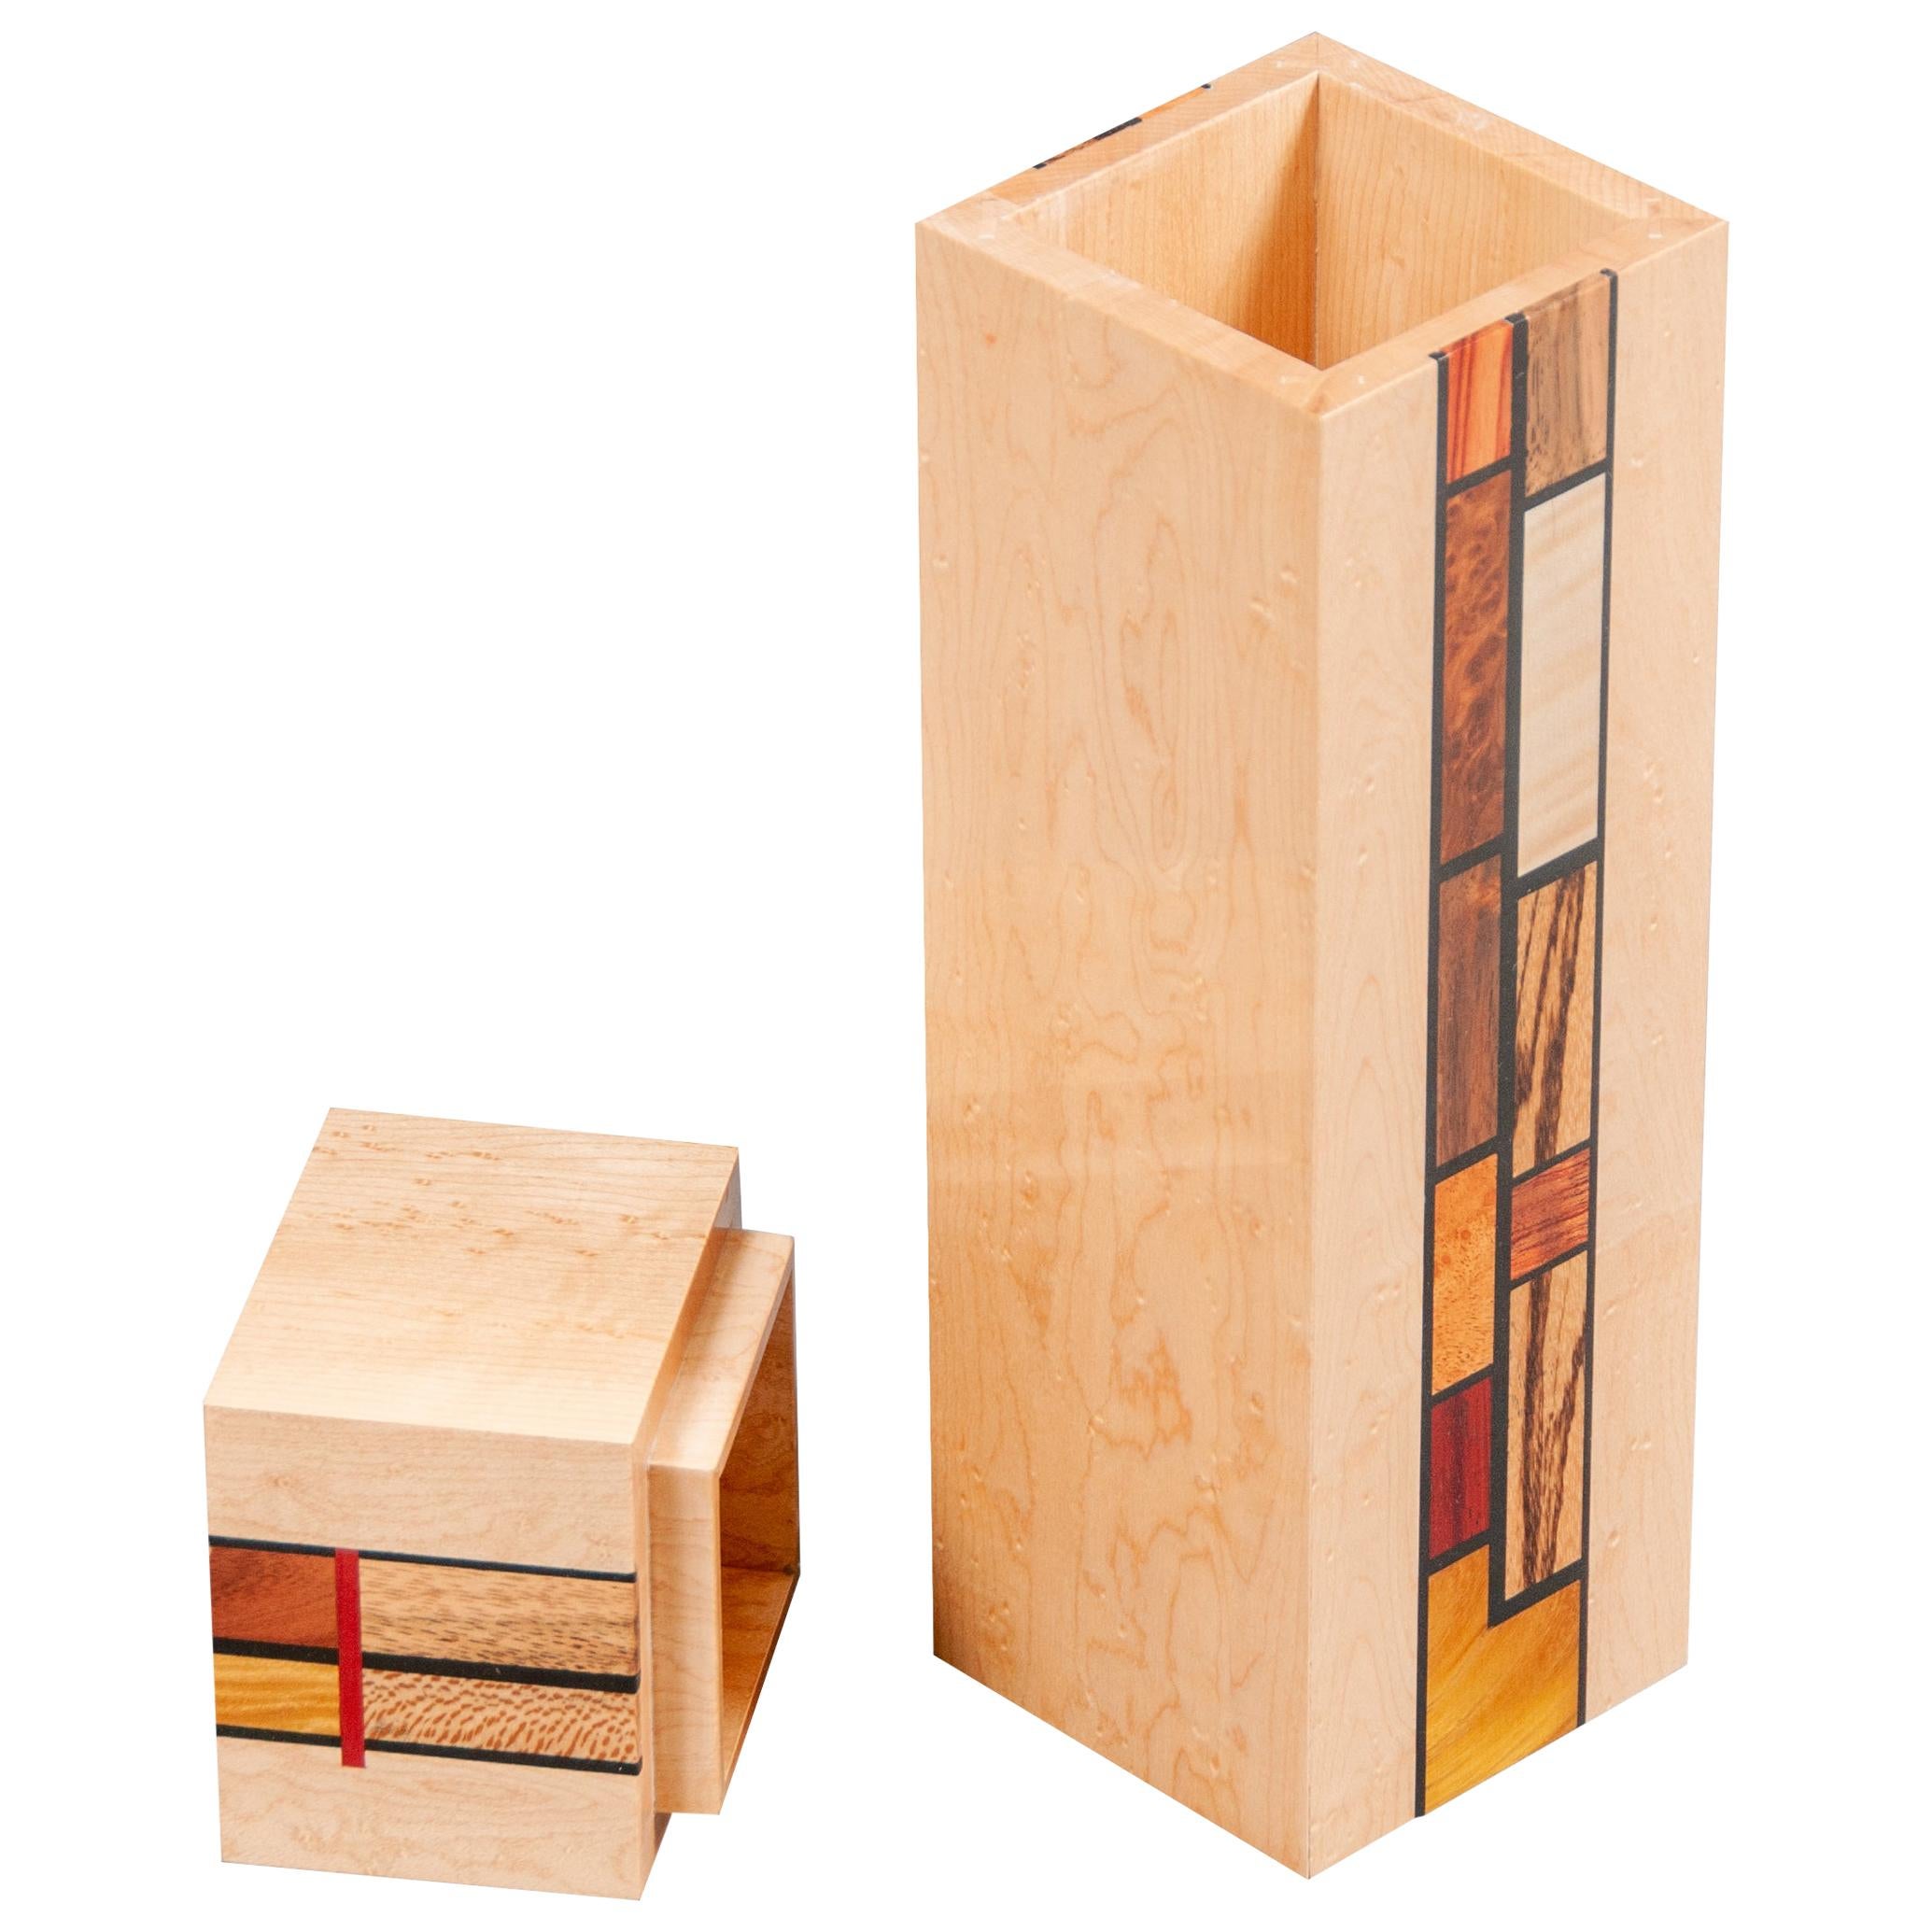 Wood Mosaic Mondrian Inspired Art Box For Sale